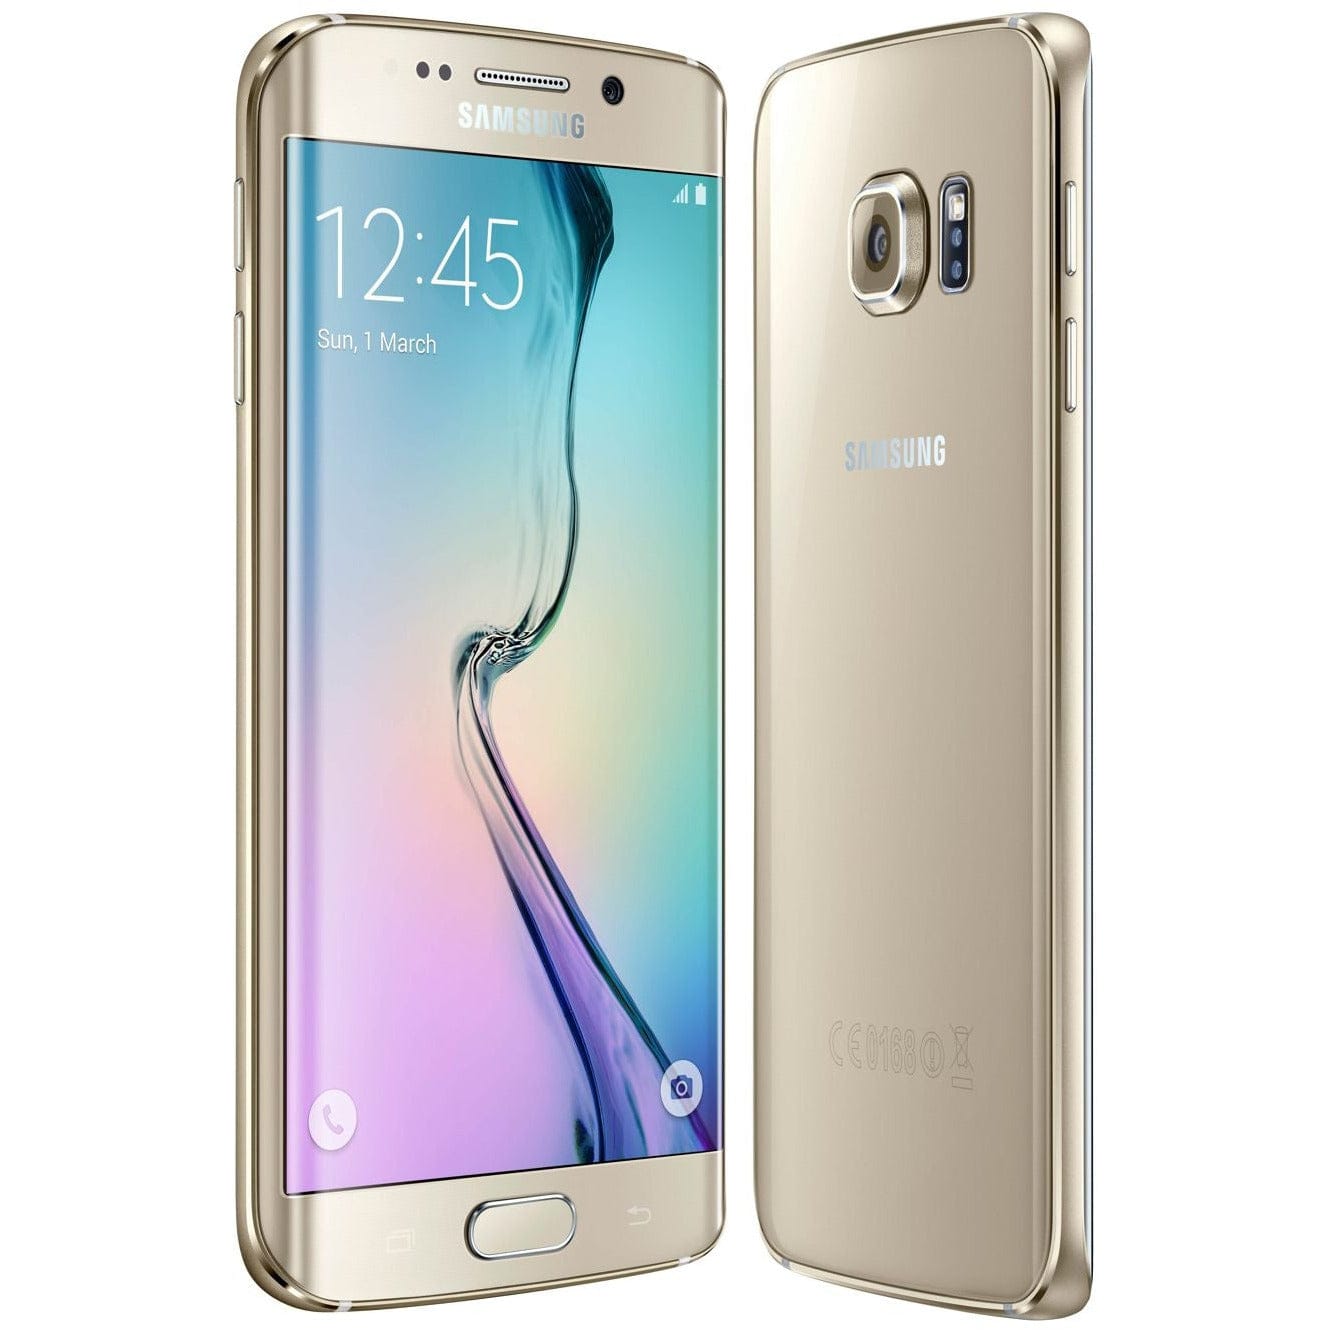 Samsung Galaxy S6 edge - 128 GB - Gold Platinum - Unlocked - GSM